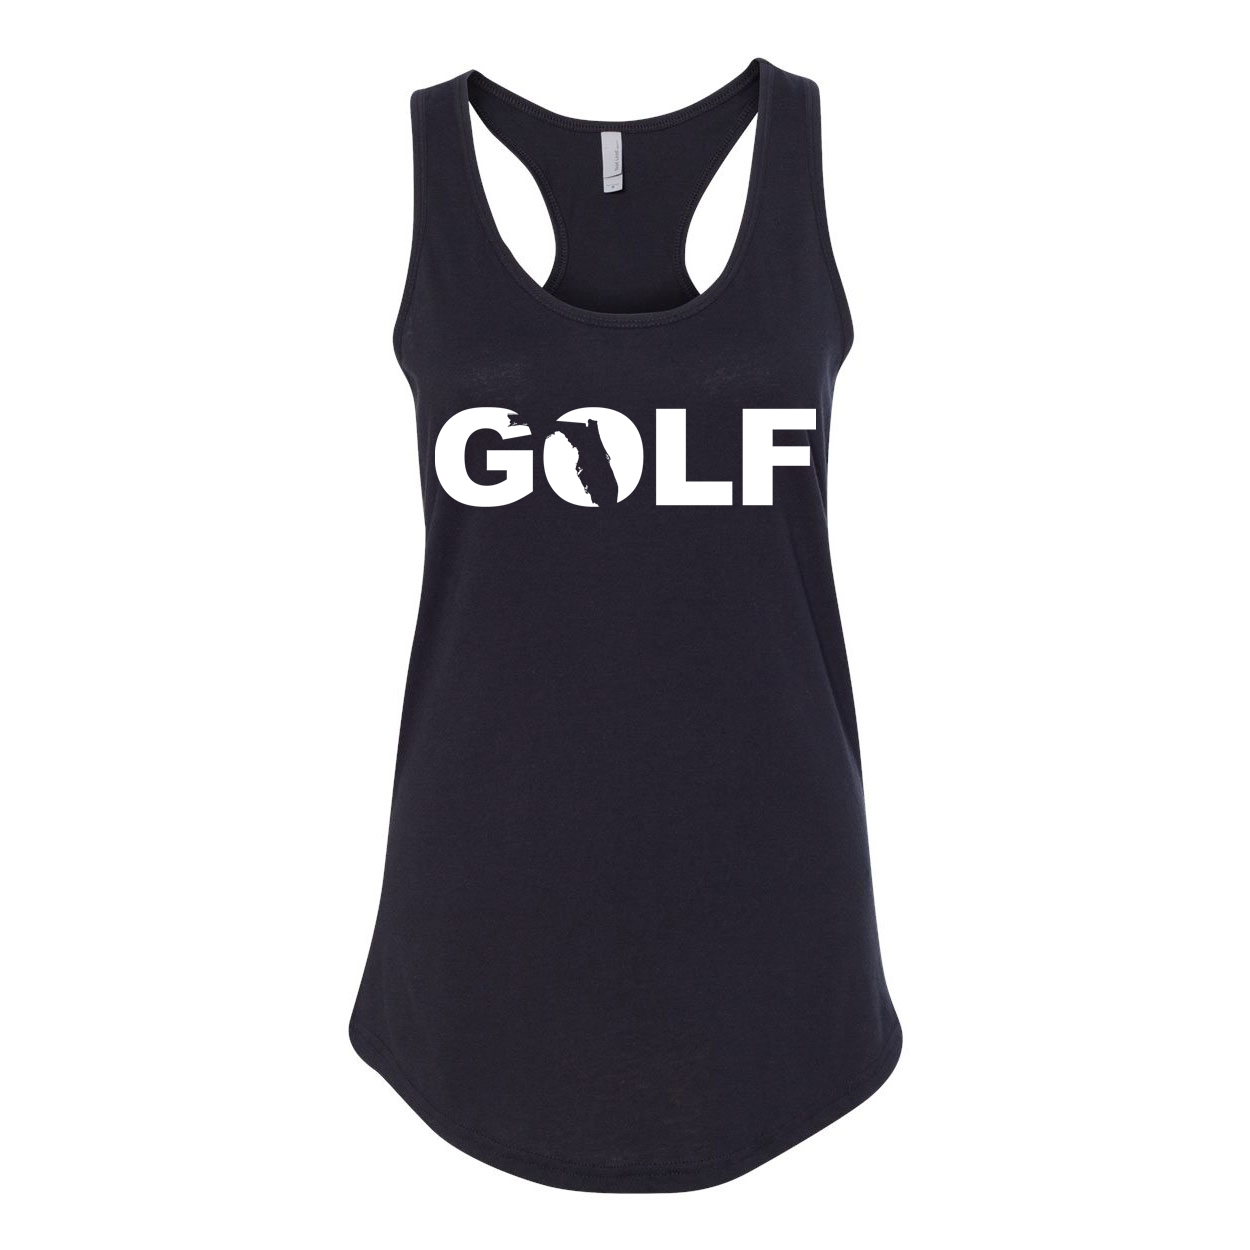 Golf Florida Classic Women's Racerback Tank Top Black (White Logo)